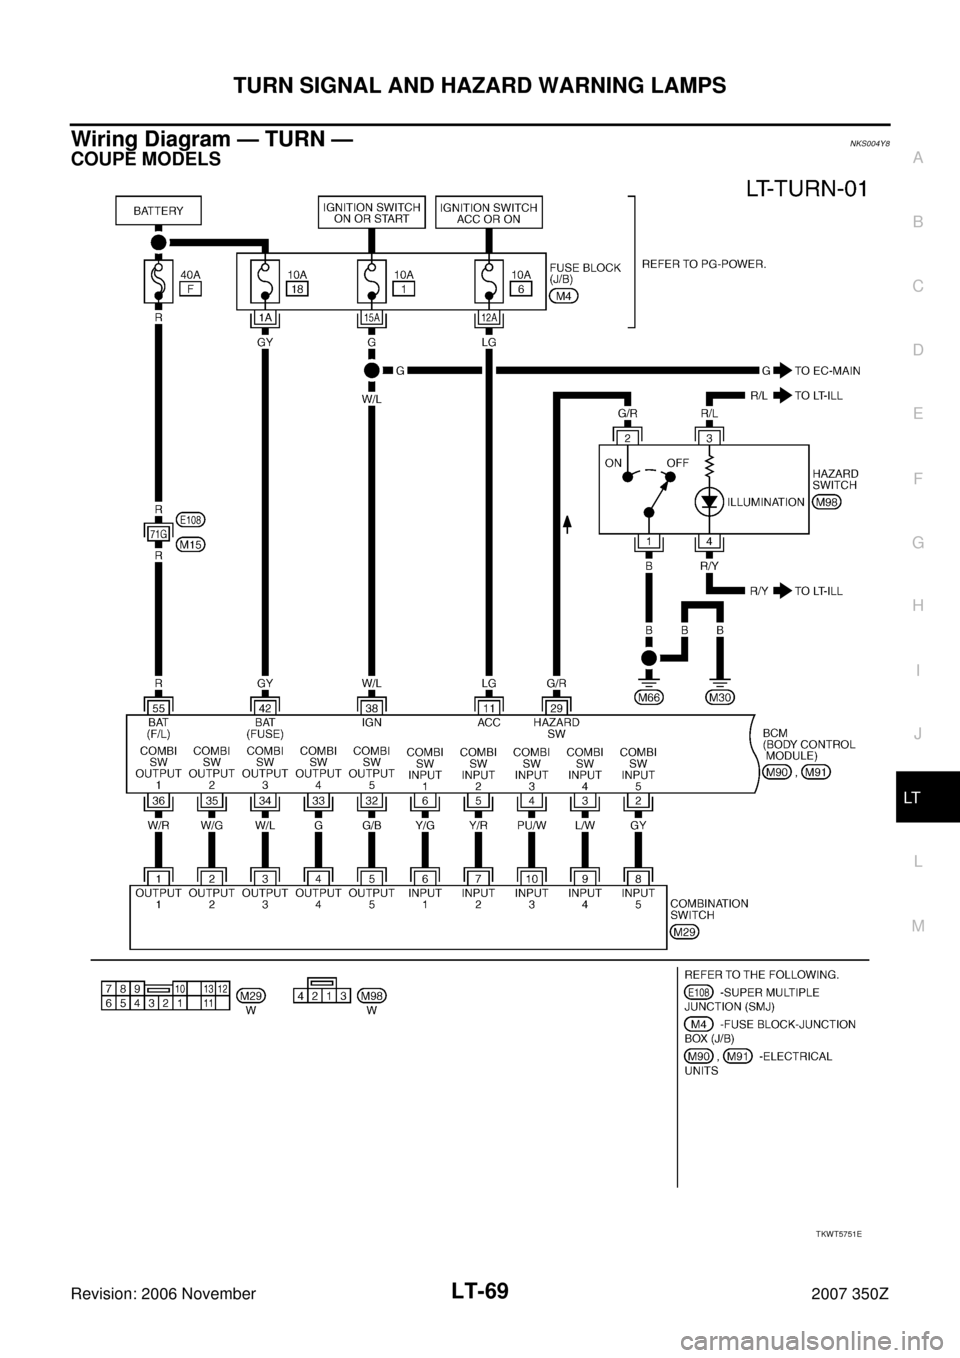 NISSAN 350Z 2007 Z33 Lighting System Workshop Manual TURN SIGNAL AND HAZARD WARNING LAMPS
LT-69
C
D
E
F
G
H
I
J
L
MA
B
LT
Revision: 2006 November2007 350Z
Wiring Diagram — TURN — NKS004Y8
COUPE MODELS
TKWT5751E 